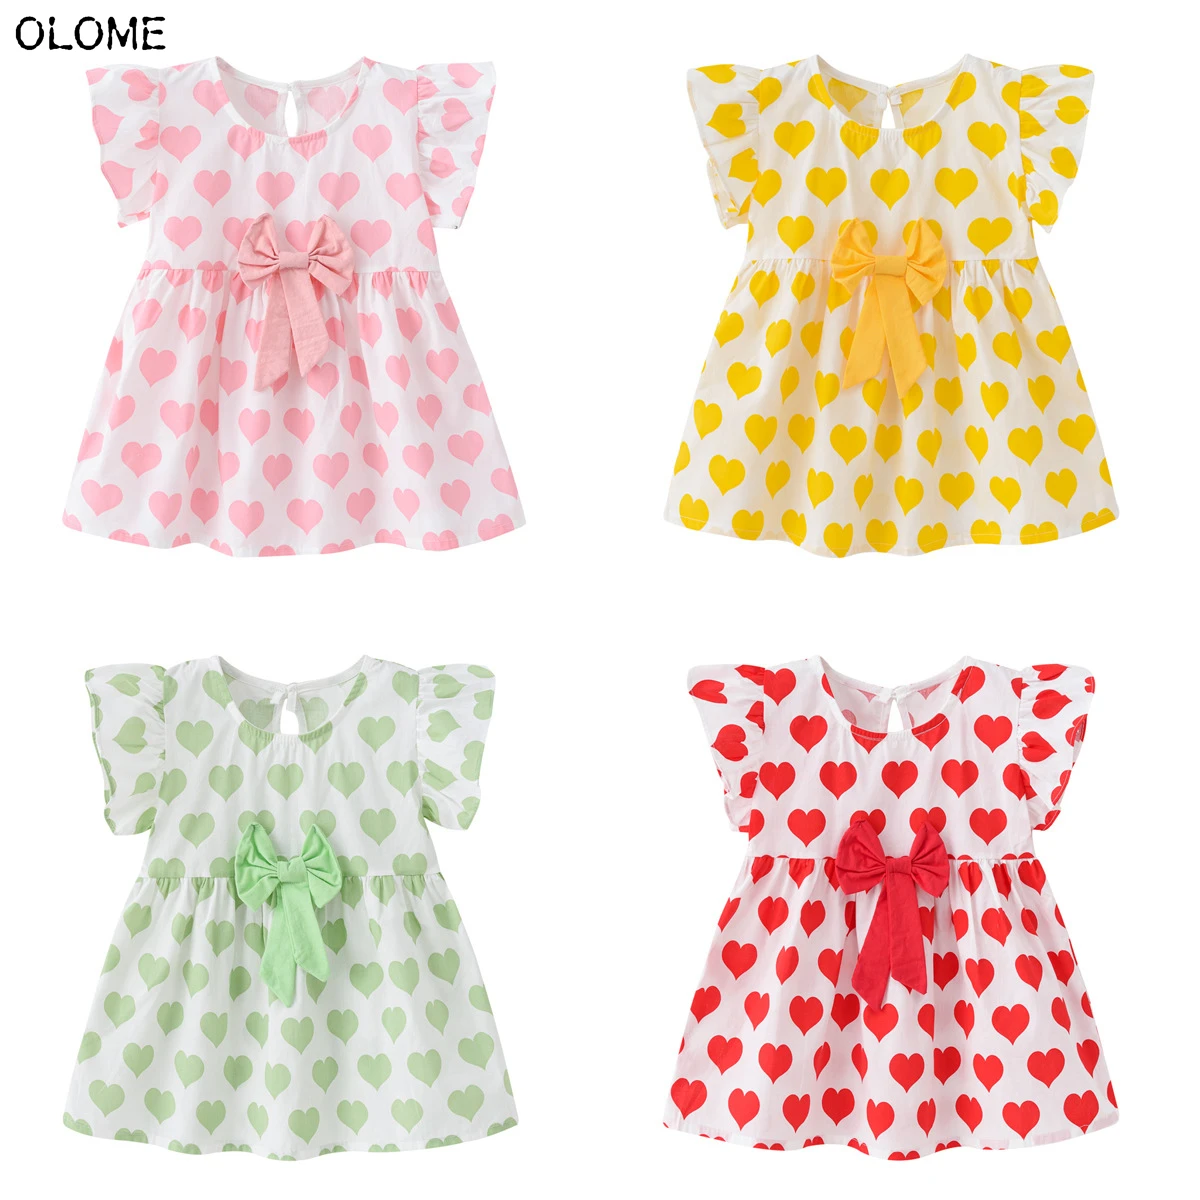 

OLOME Summer Short Sugar Baby Girls Dresses Casual Colorful Girls Skirts Hot Sale Floral Sleeveless Kid Girls Light Dresses